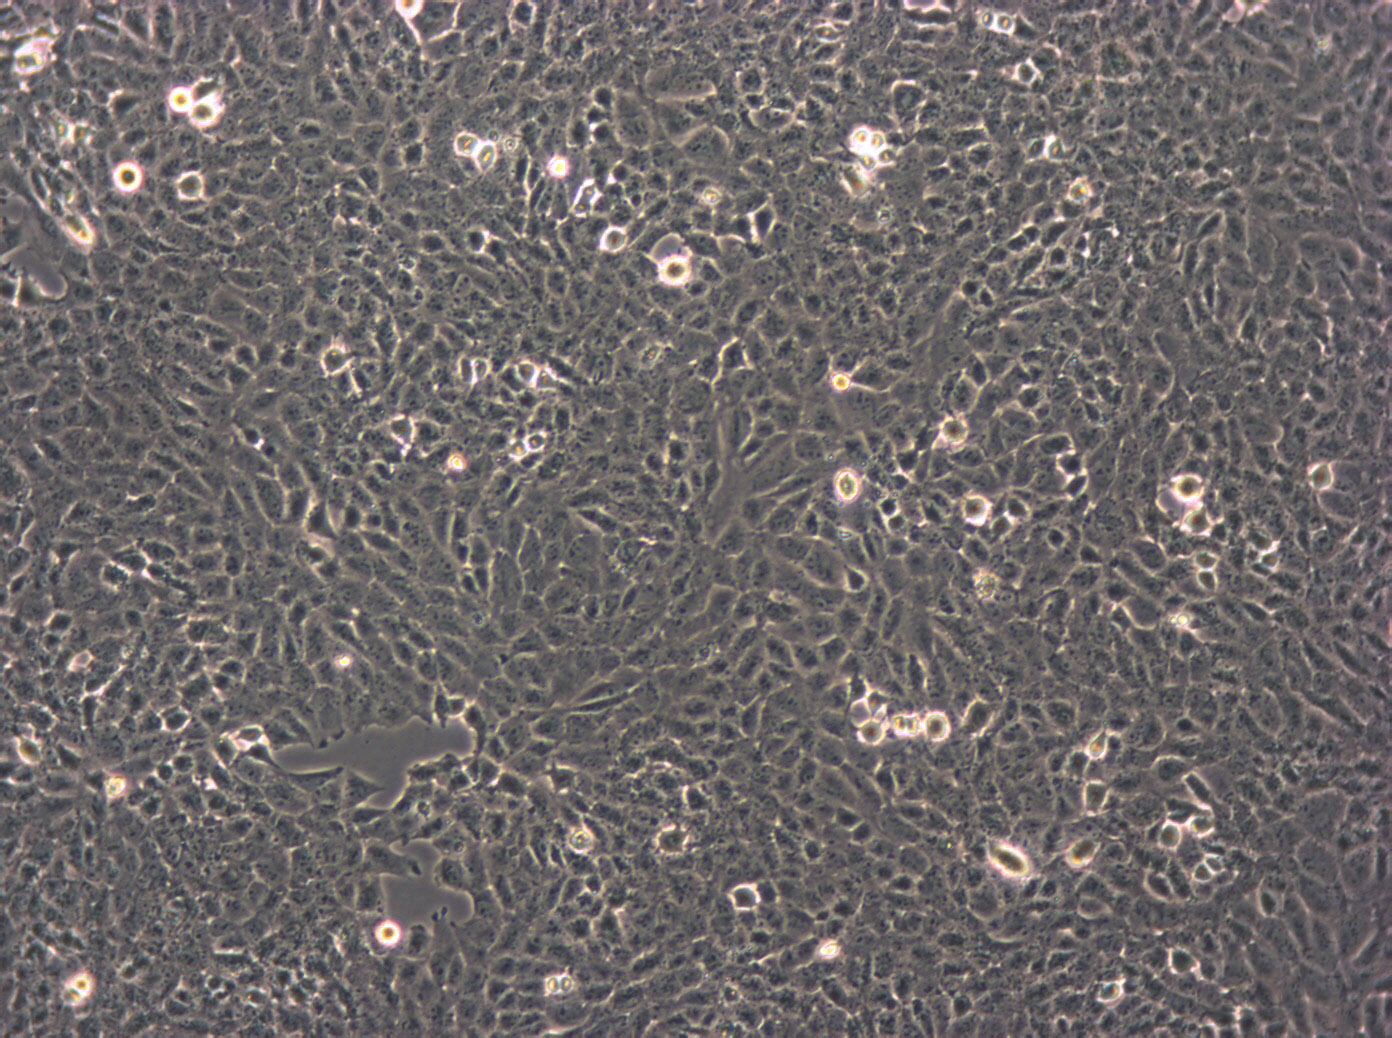 SNU-878:人肝癌复苏细胞(提供STR鉴定图谱),SNU-878